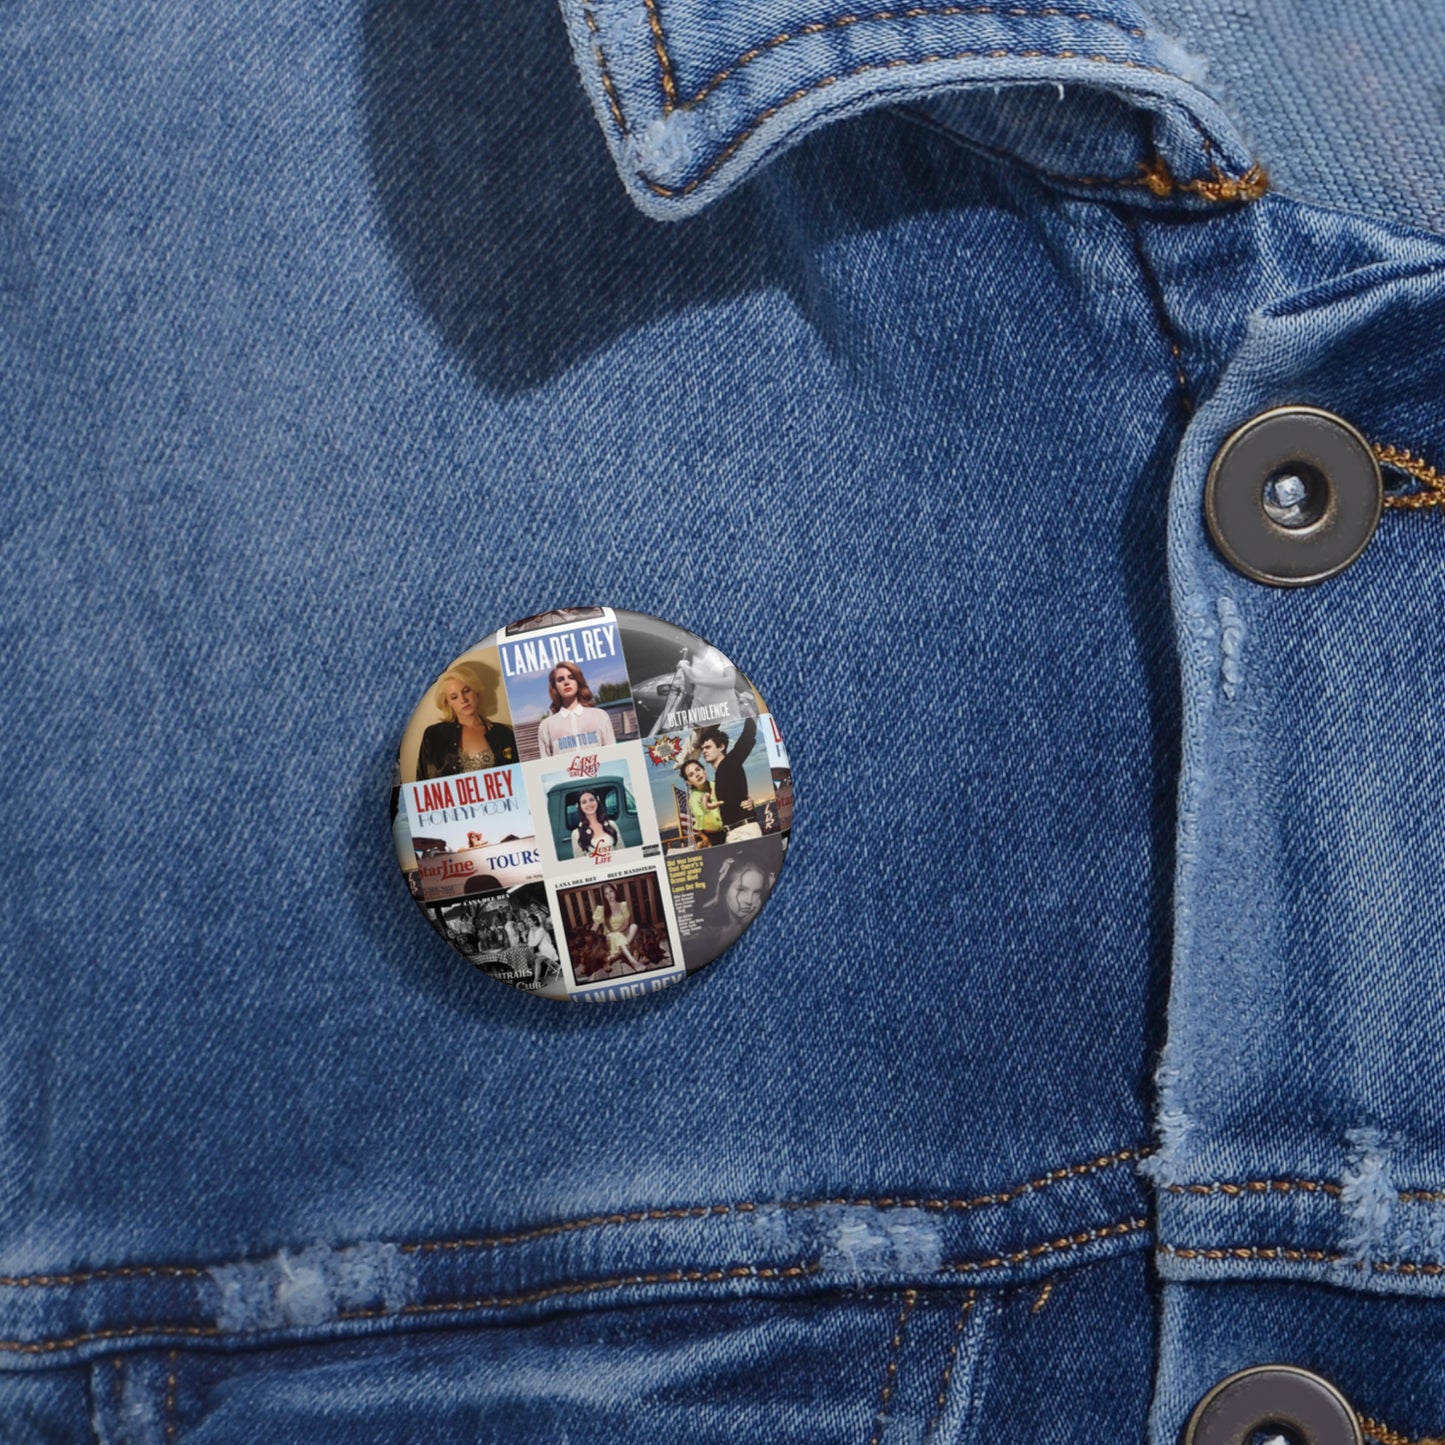 Lana Del Rey Album Cover Collage Round Pin